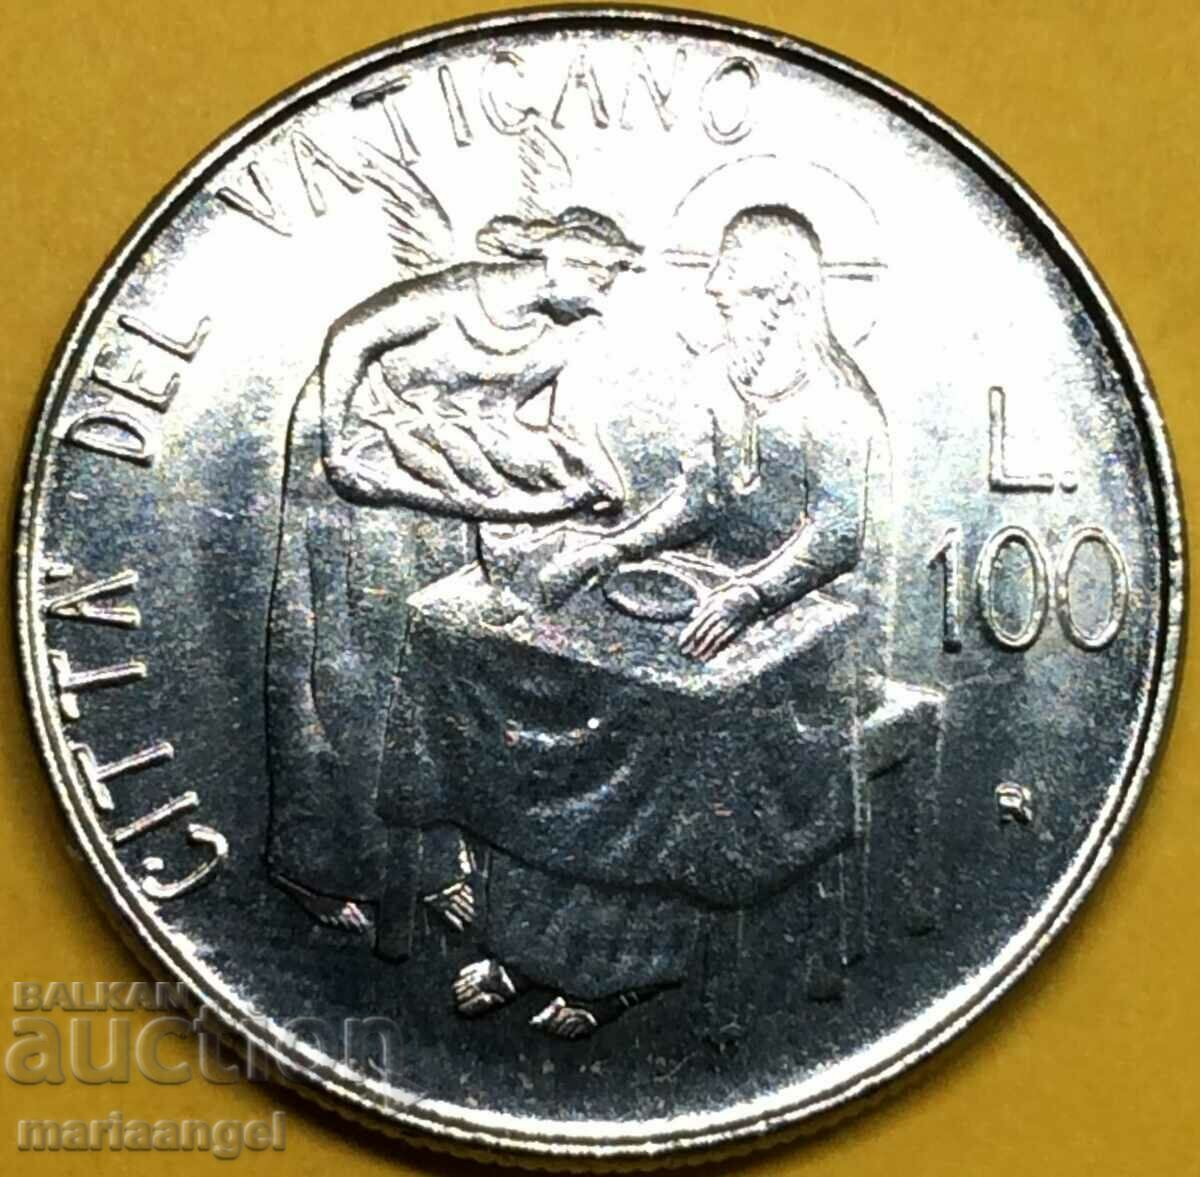 100 lire 1981 Vatican "4 pesti" 27mm